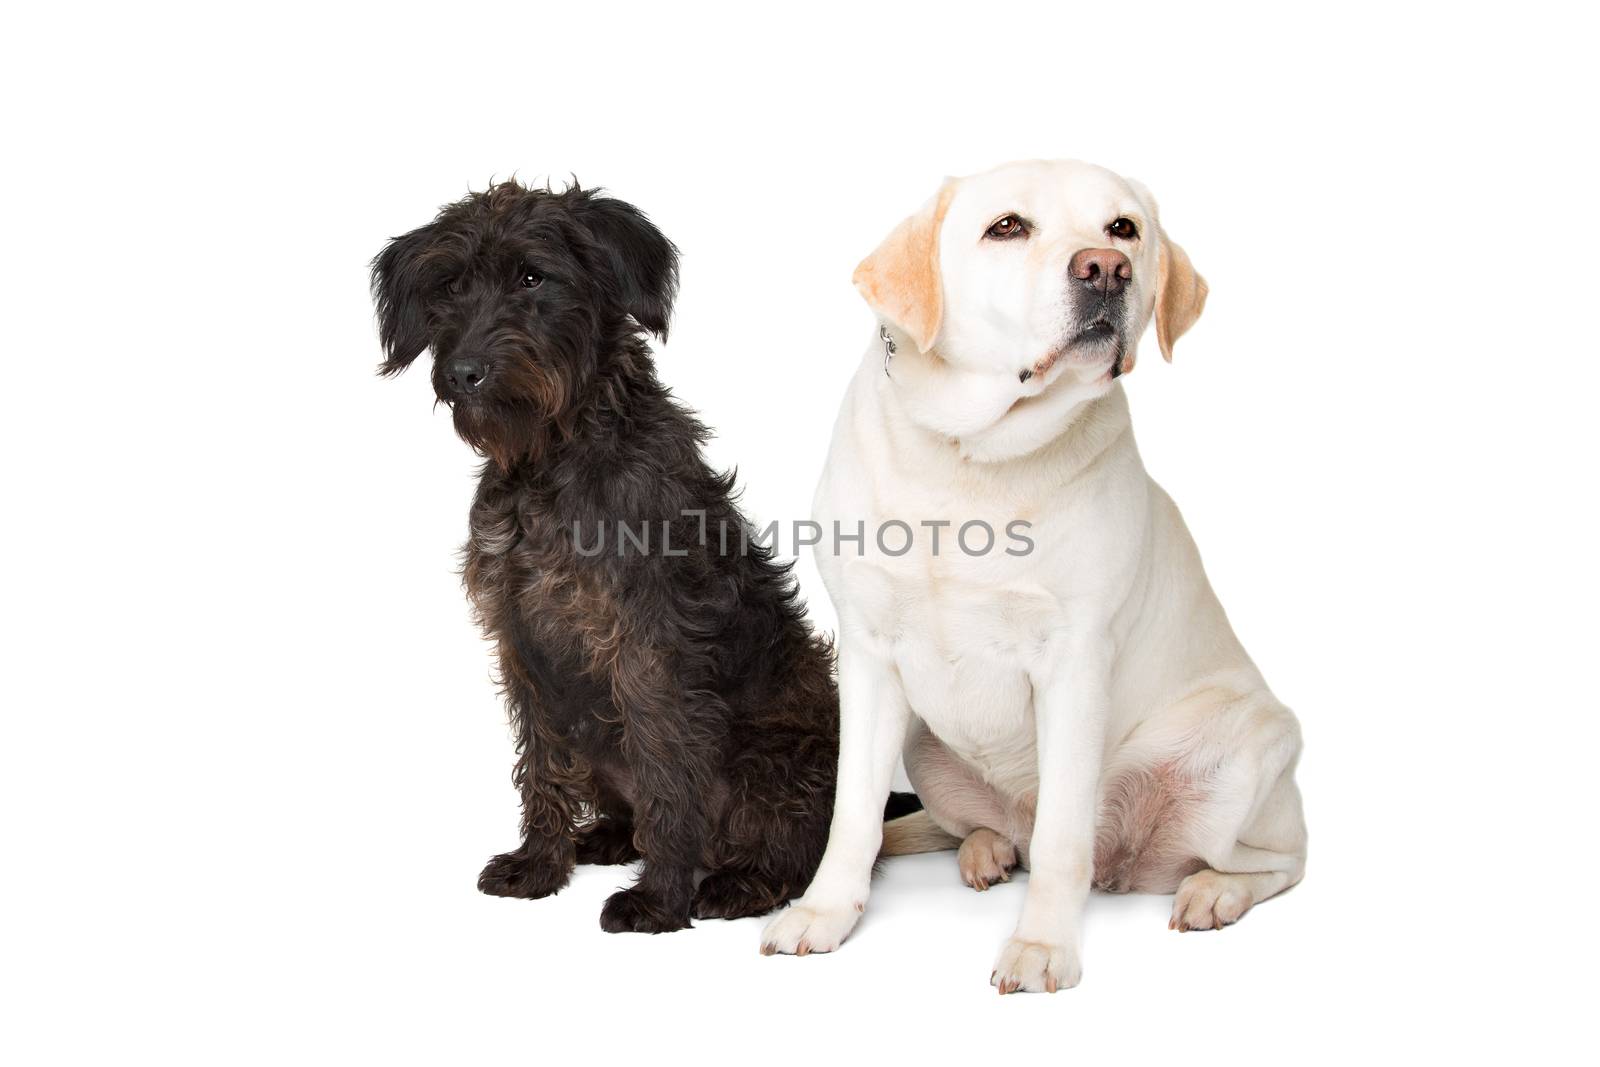 Labrador and a black fluffy dog by eriklam